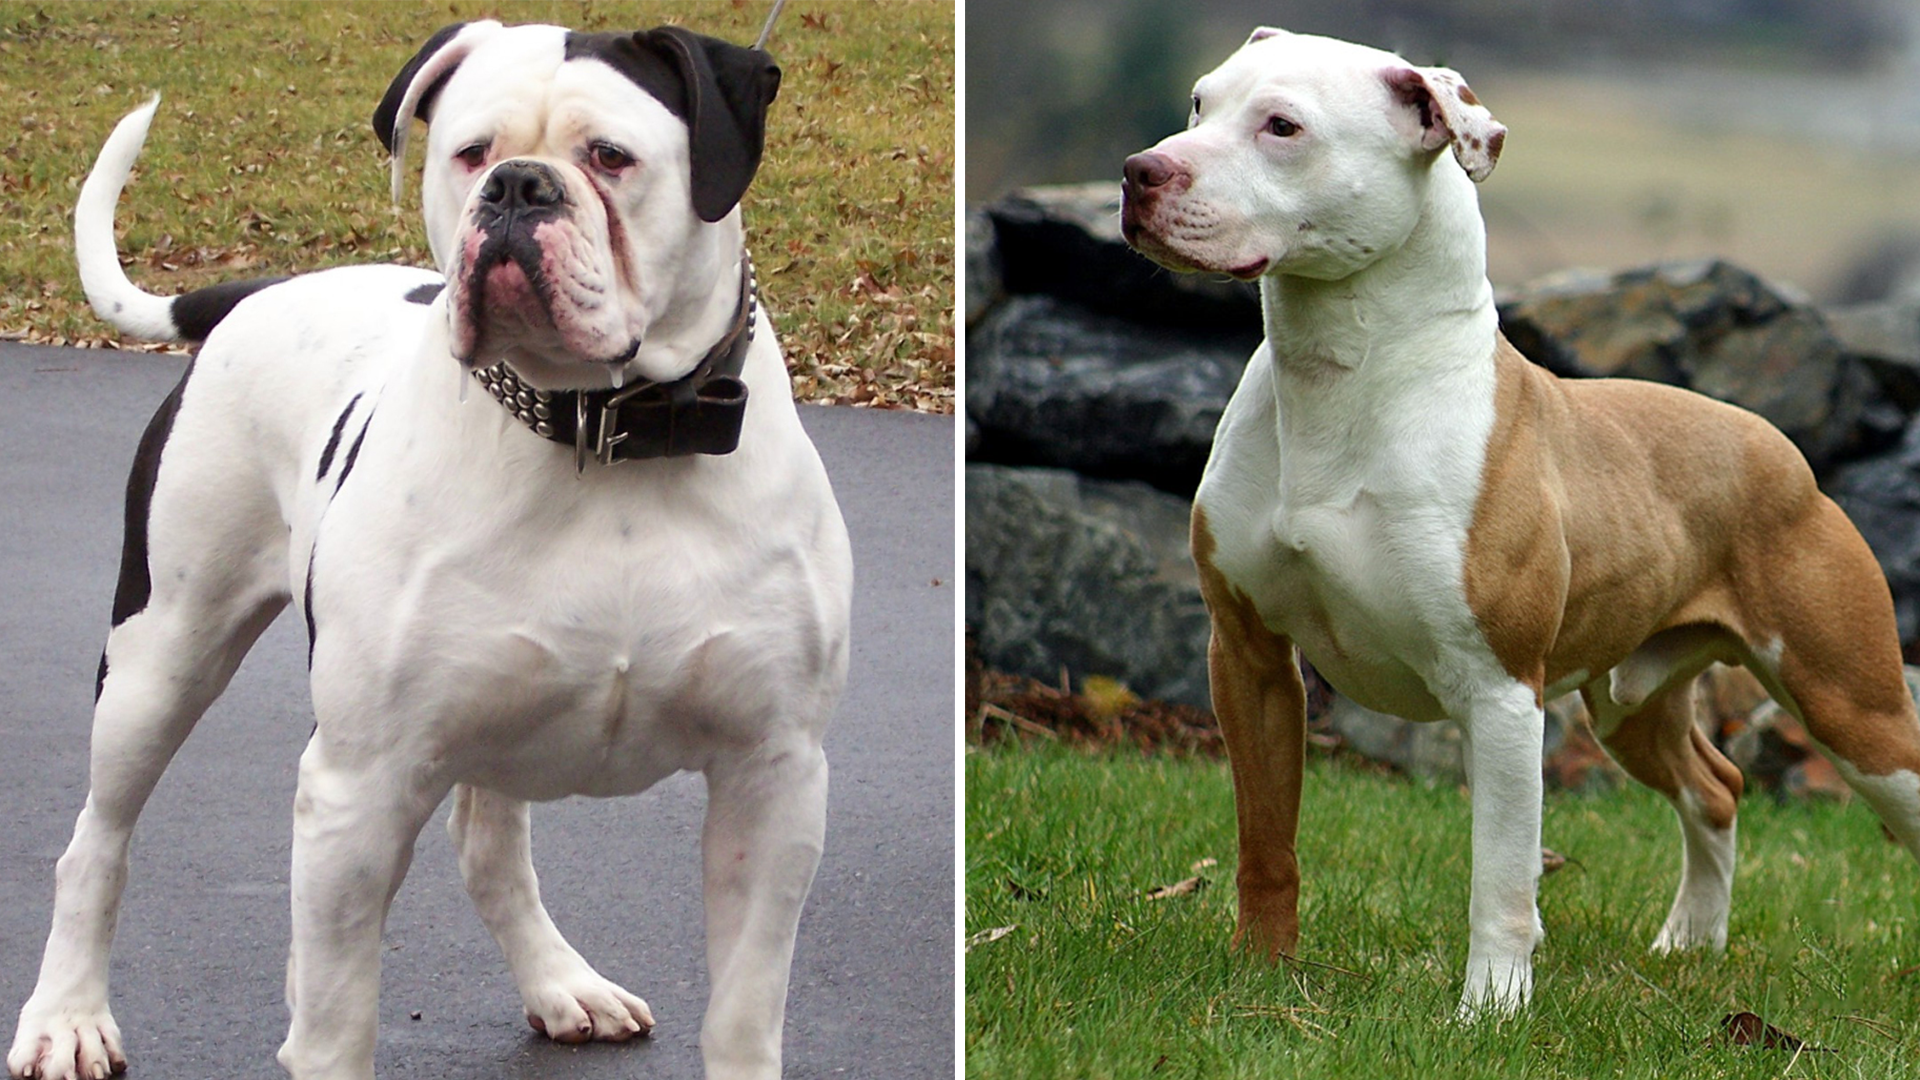 Comparing Breeds: American Bulldog vs. Pitbull